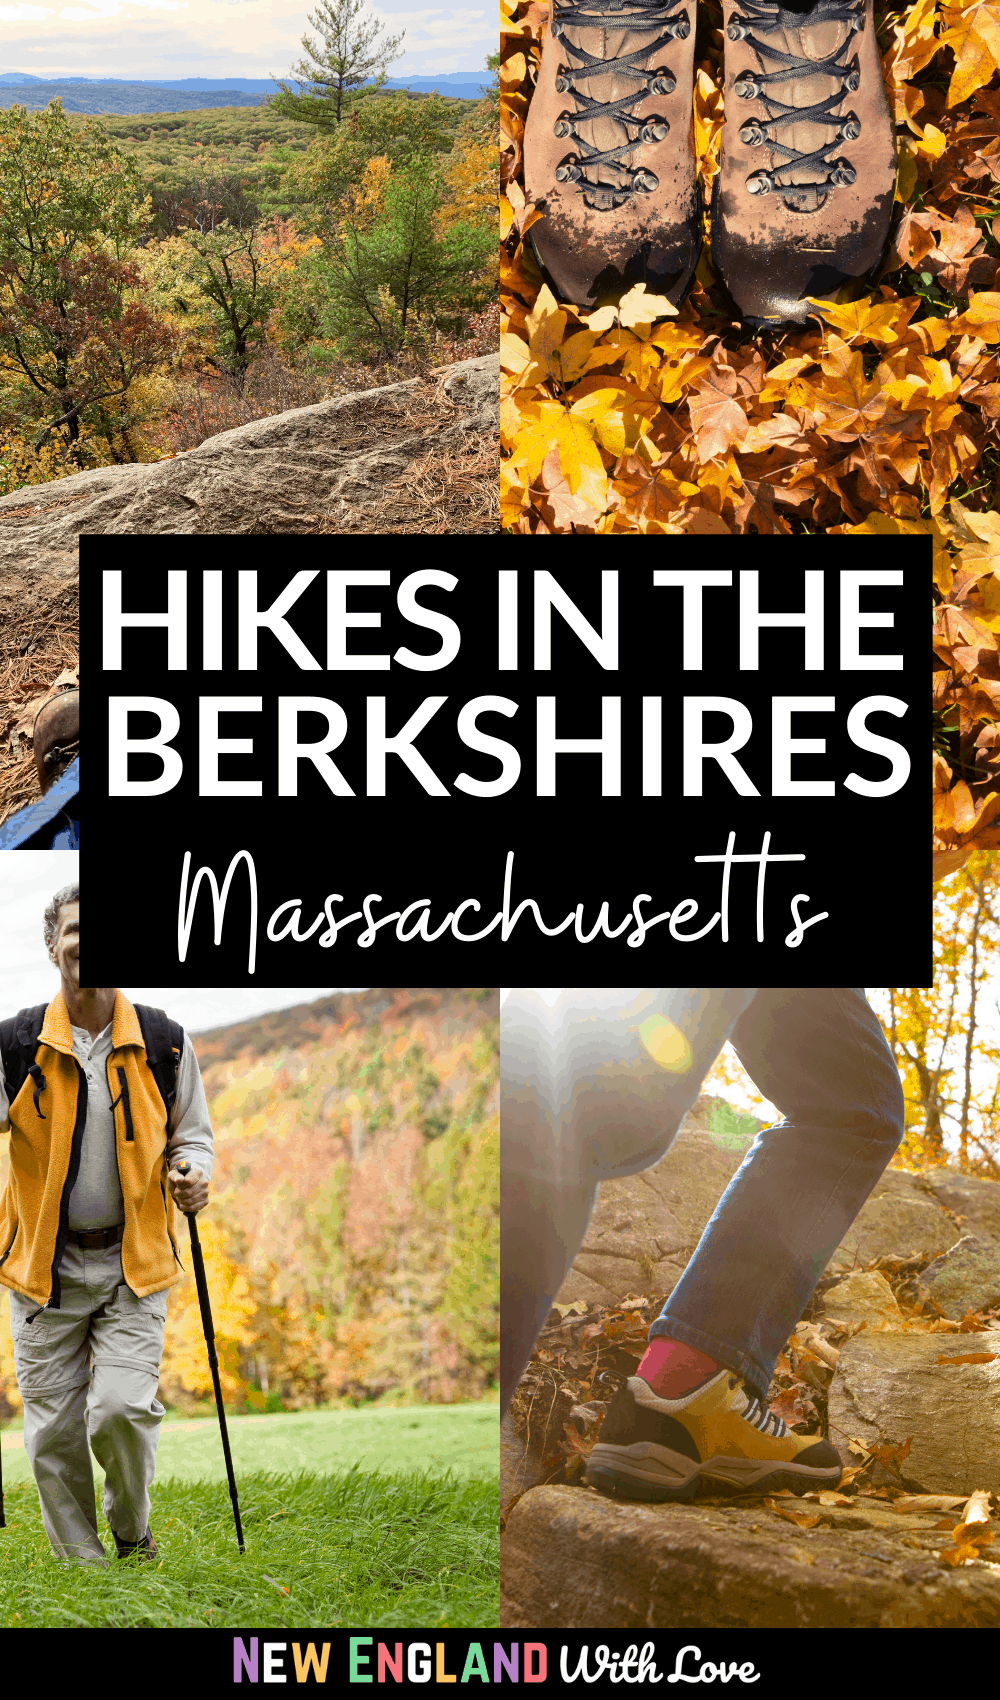 Pinterest graphic reading "Hikes in the Berkshires Massachusetts"